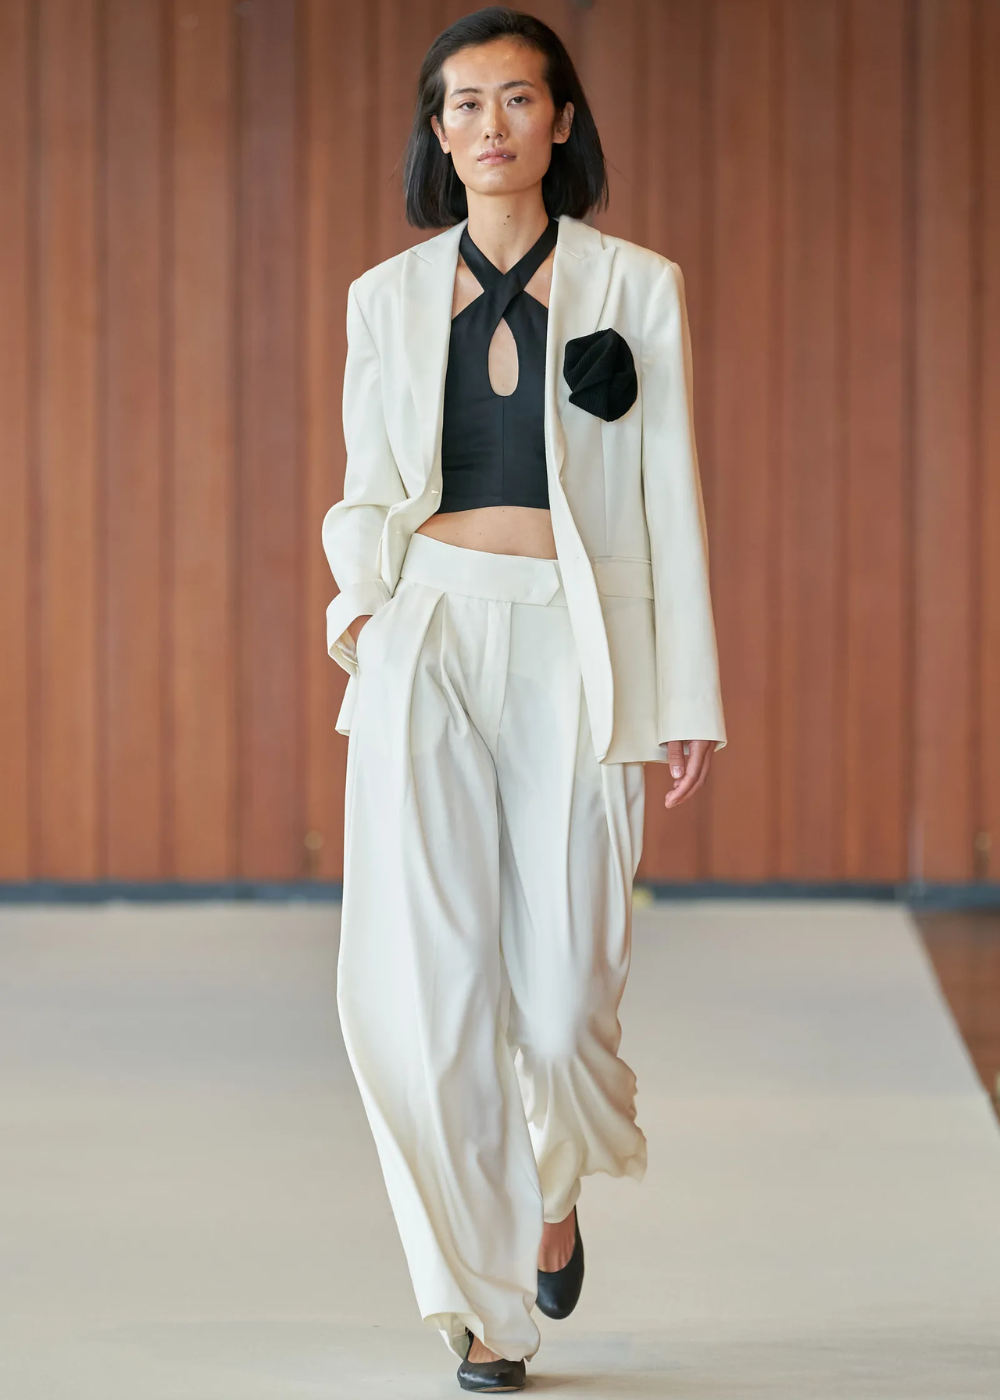 The Garment - conjunto de alfaiataria branco e top preto cruzado - semana de moda de Copenhagen - Primavera - modelo andando pela passarela - https://stealthelook.com.br